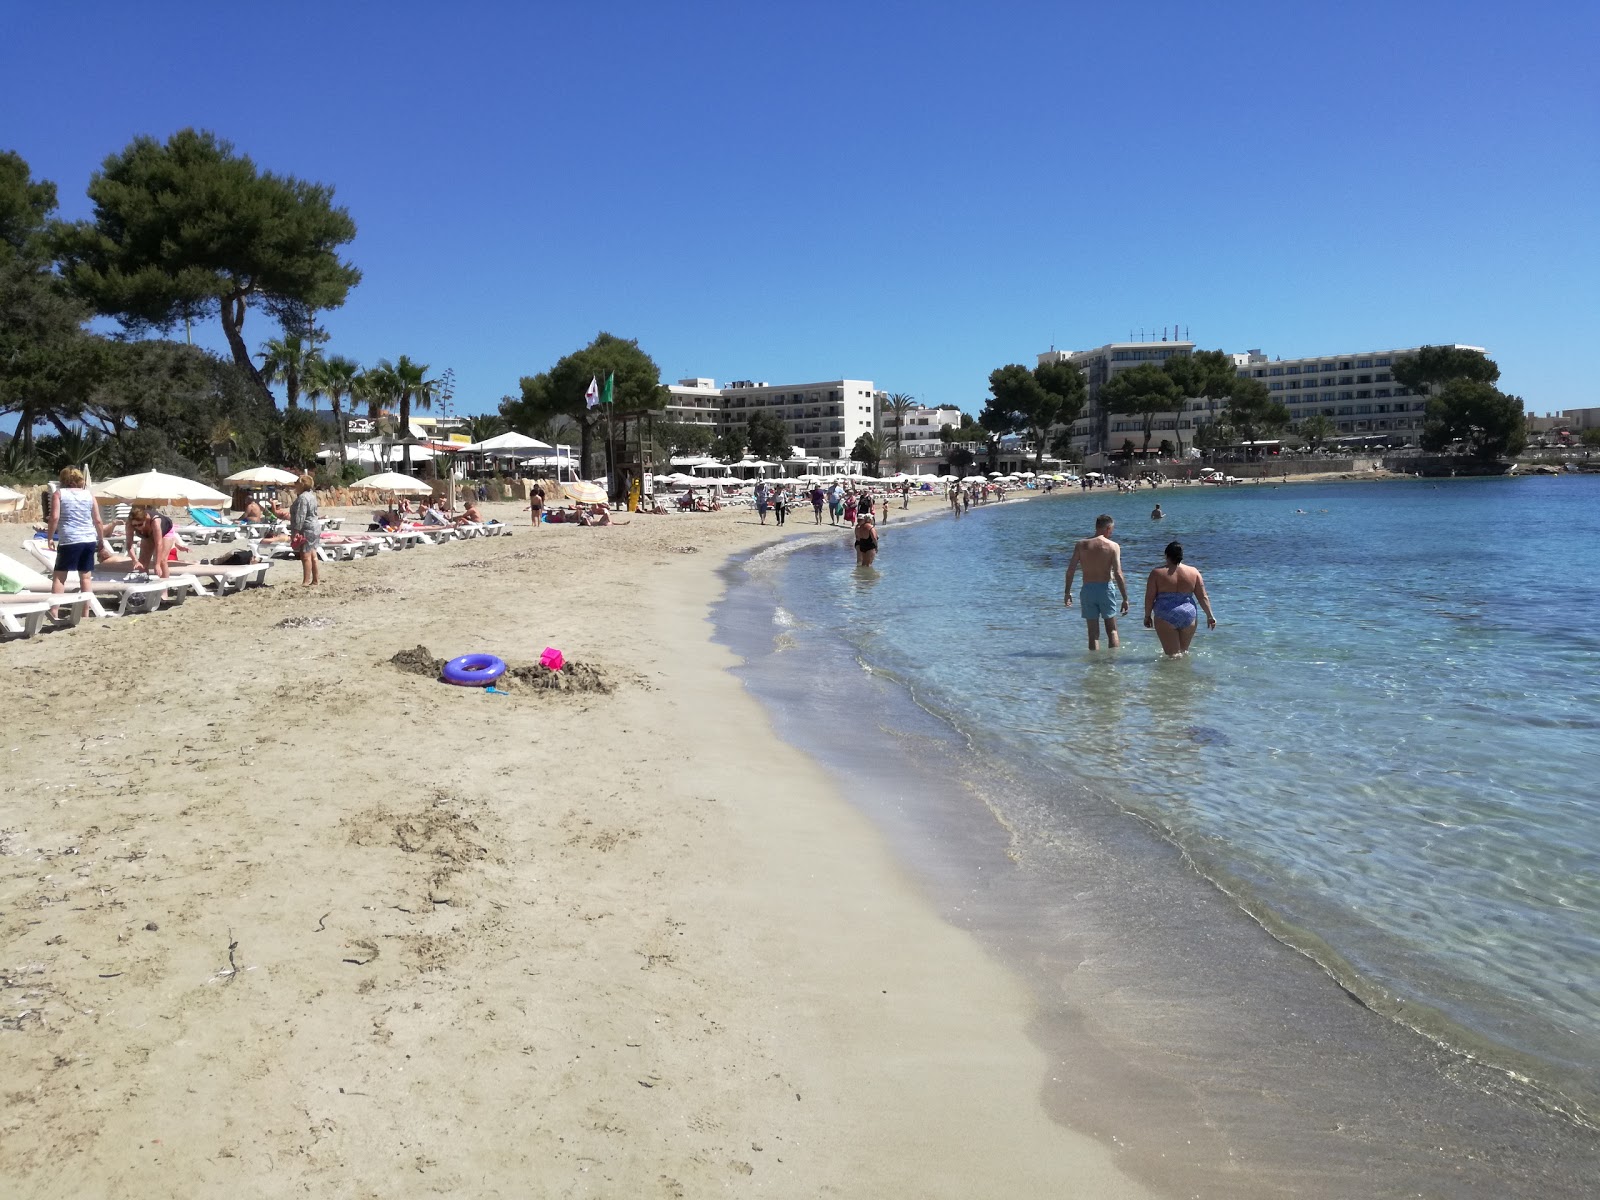 Fotografie cu Plaja Es Canar cu nivelul de curățenie in medie